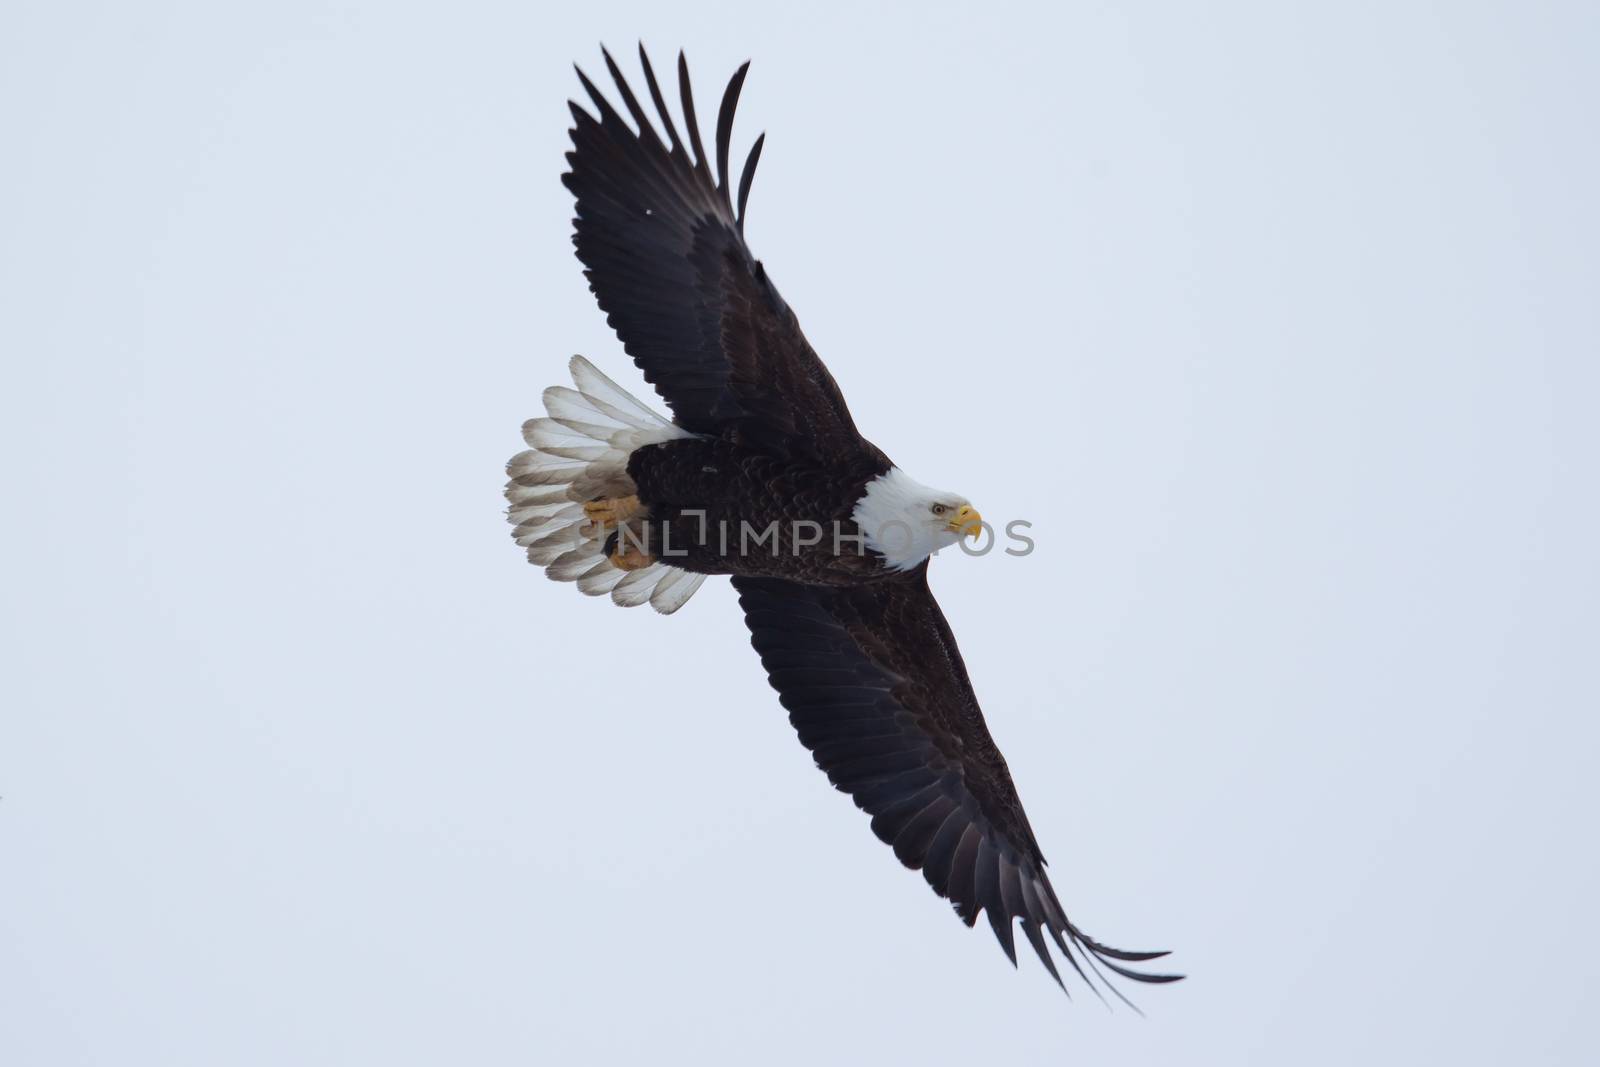 American Bald Eagle in flight by Coffee999